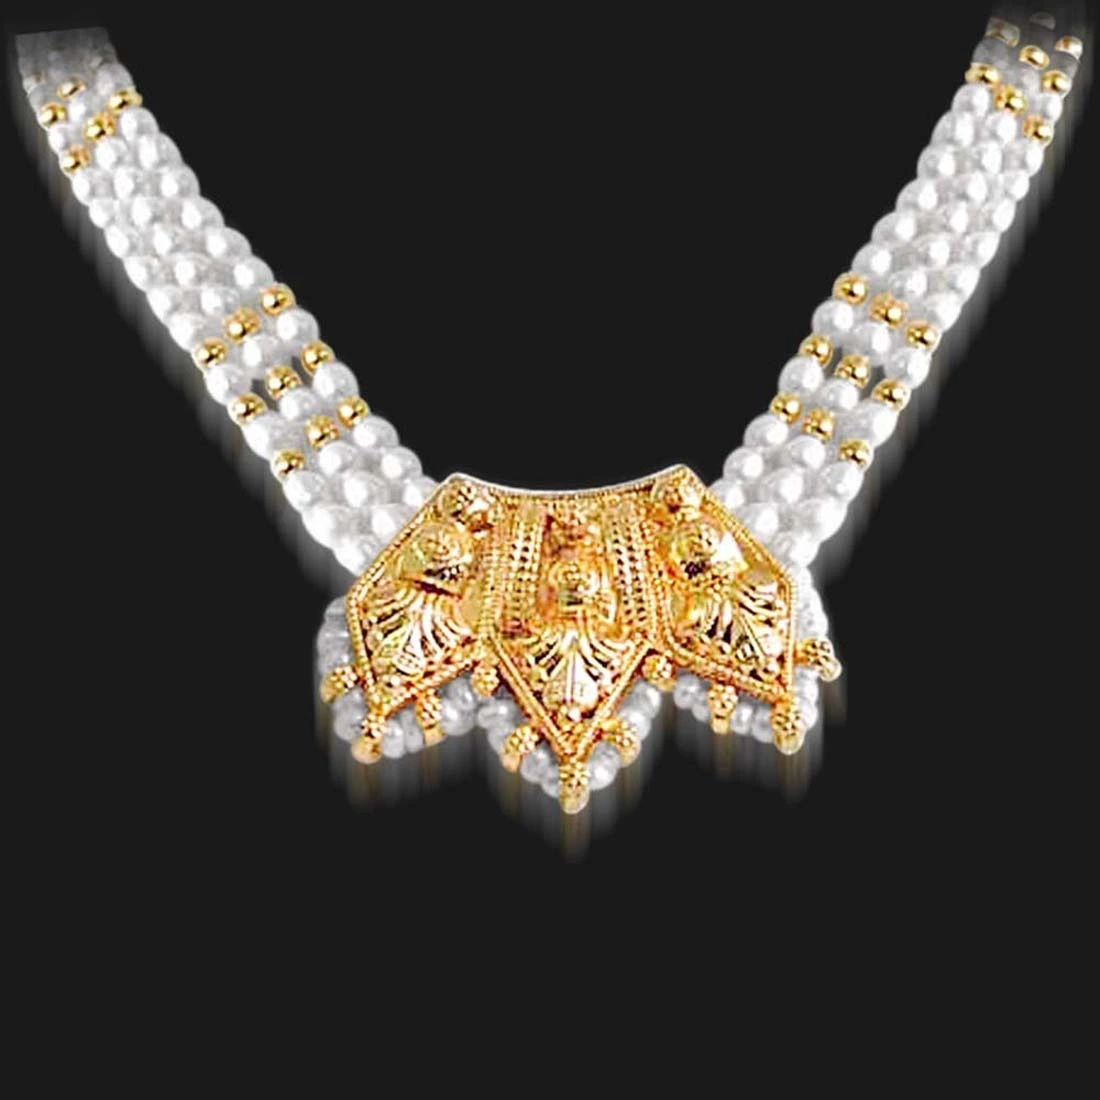 Allure - Gold Plated Temple Design Pendant & 3 Line Rice Pearl Pendant Necklace for Women (SNP11)